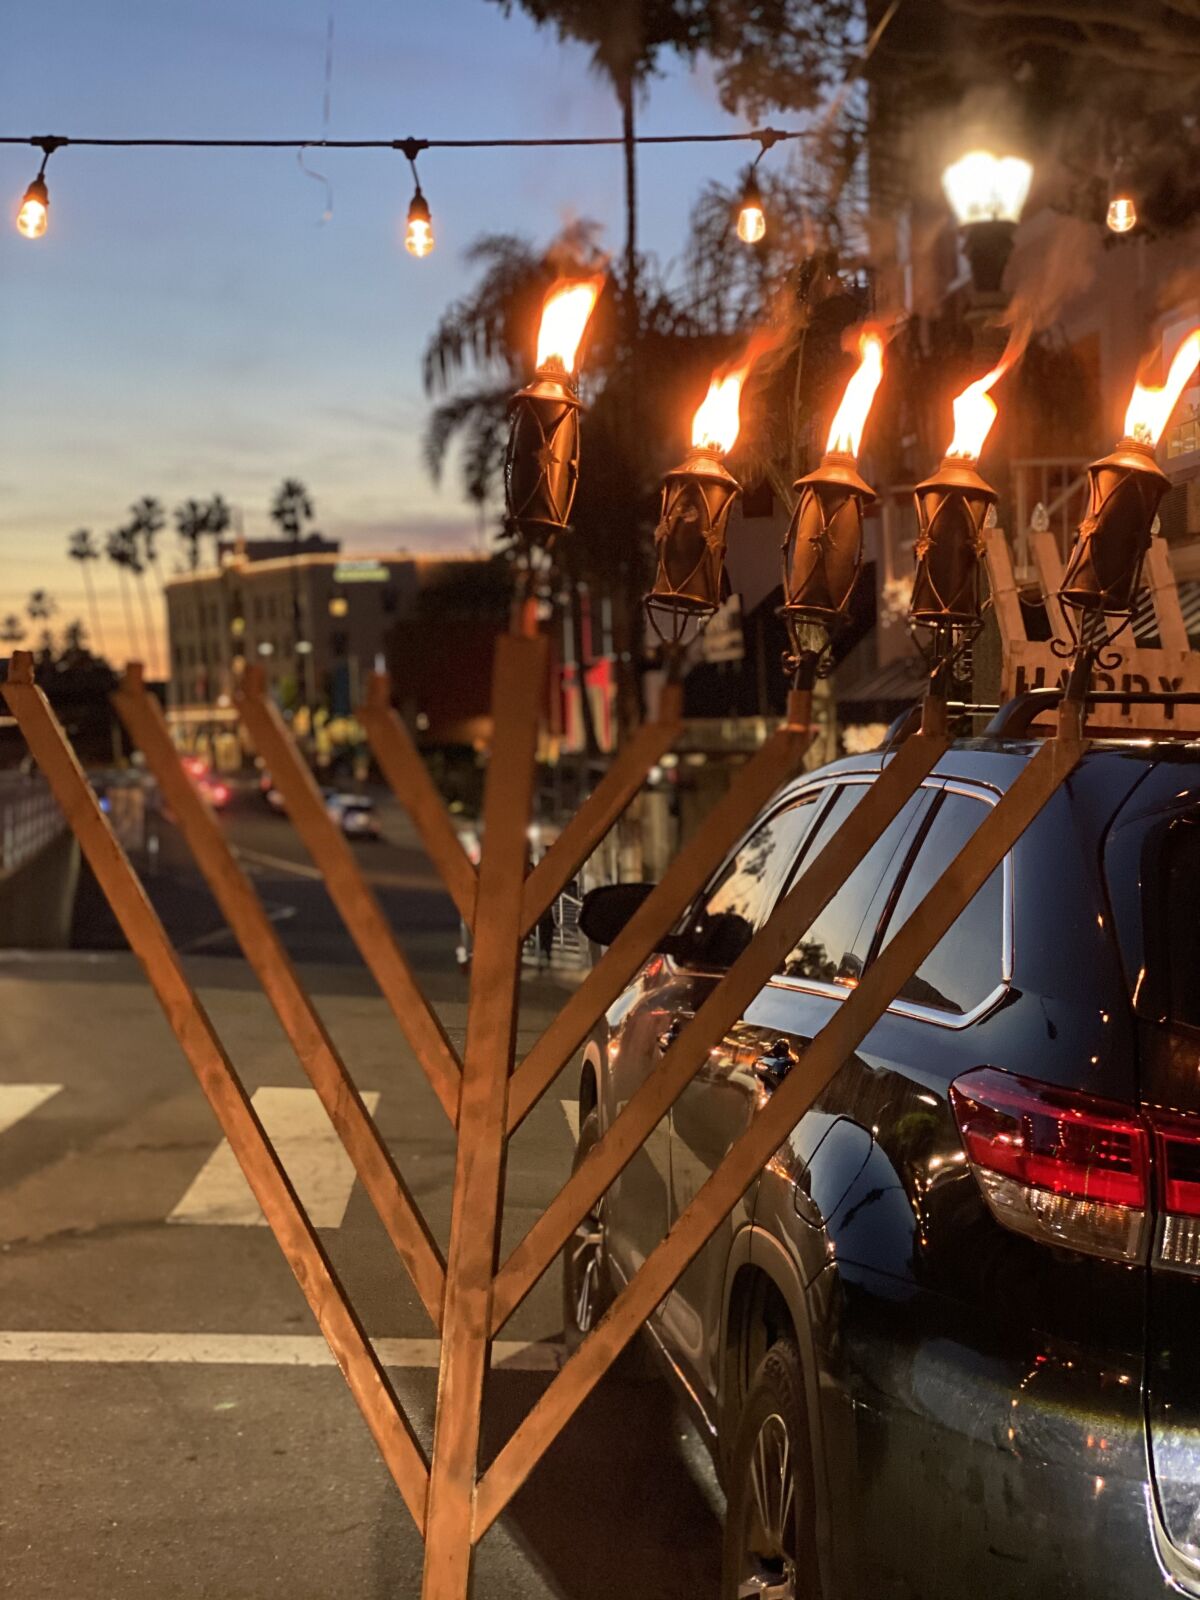 Chabad of La Jolla held a menorah lighting Dec. 13 in front of the La Valencia Hotel on Prospect Street.